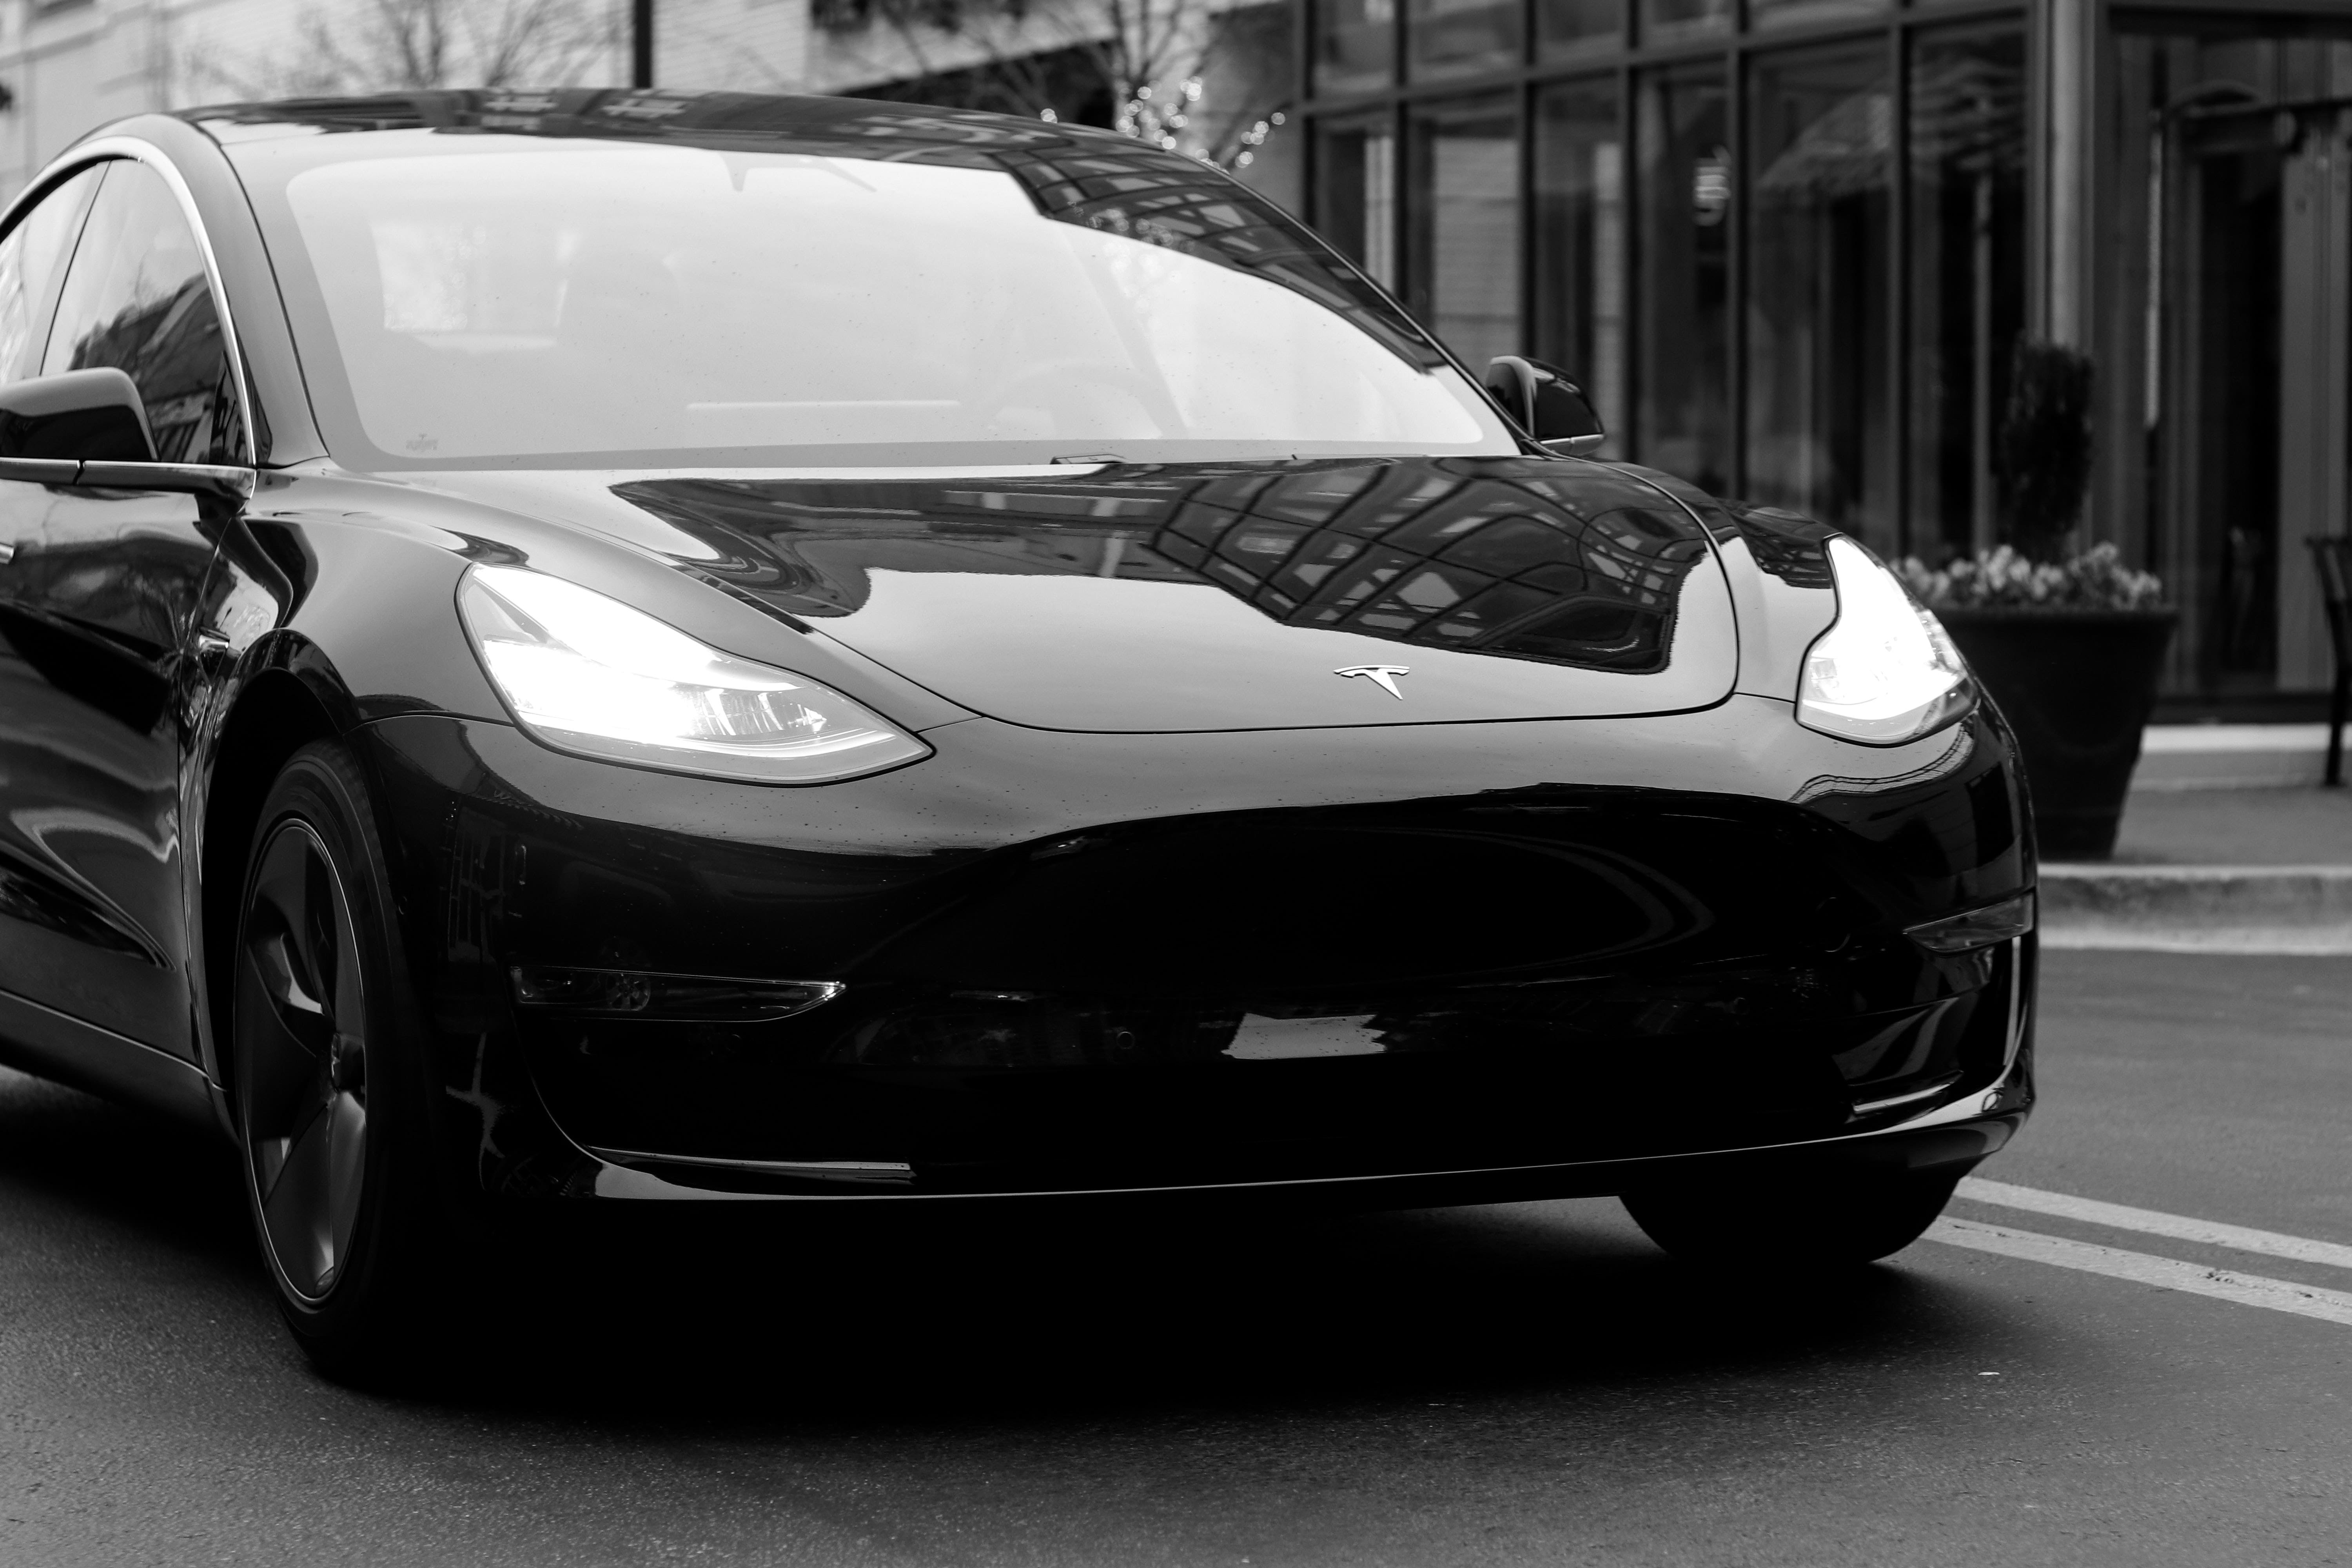 Tesla's Big Advantage Over Legacy Automakers? Software, Says Munster